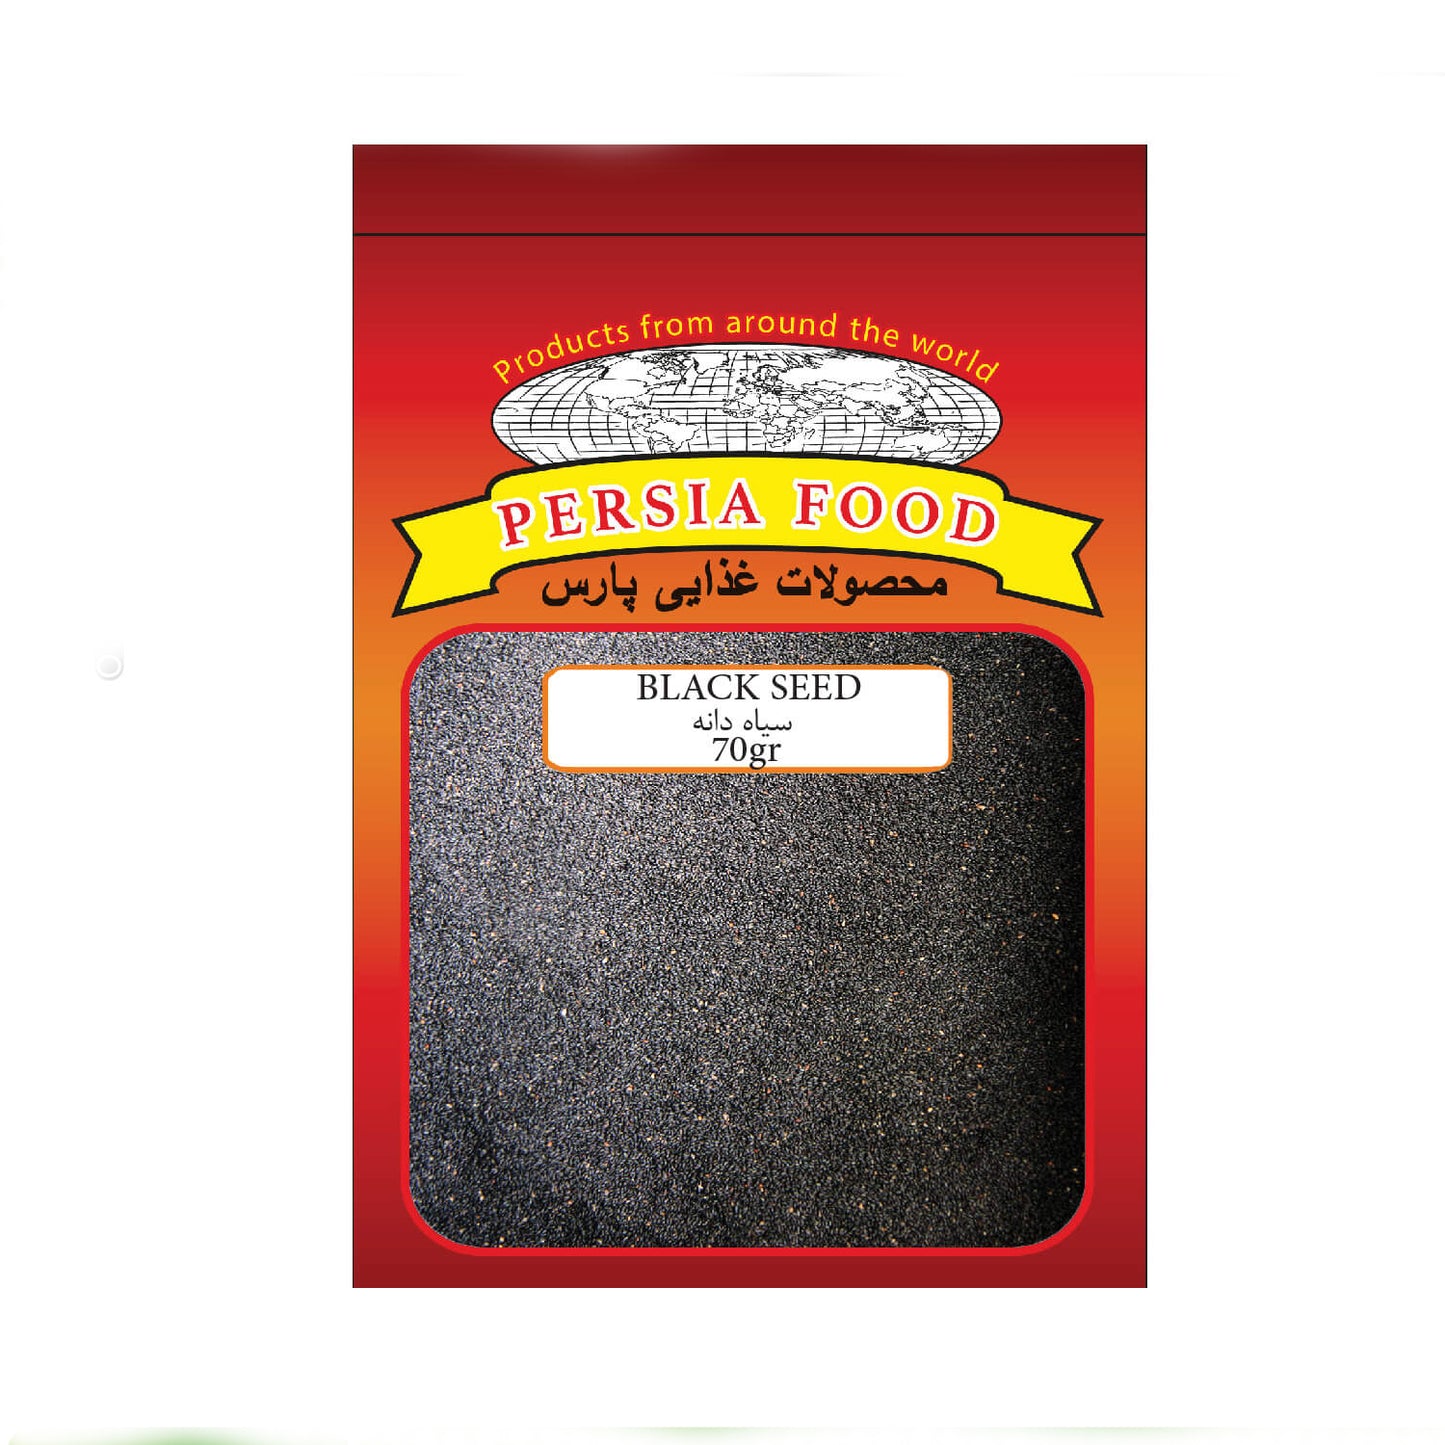 Persia Food Black Seeds 70G